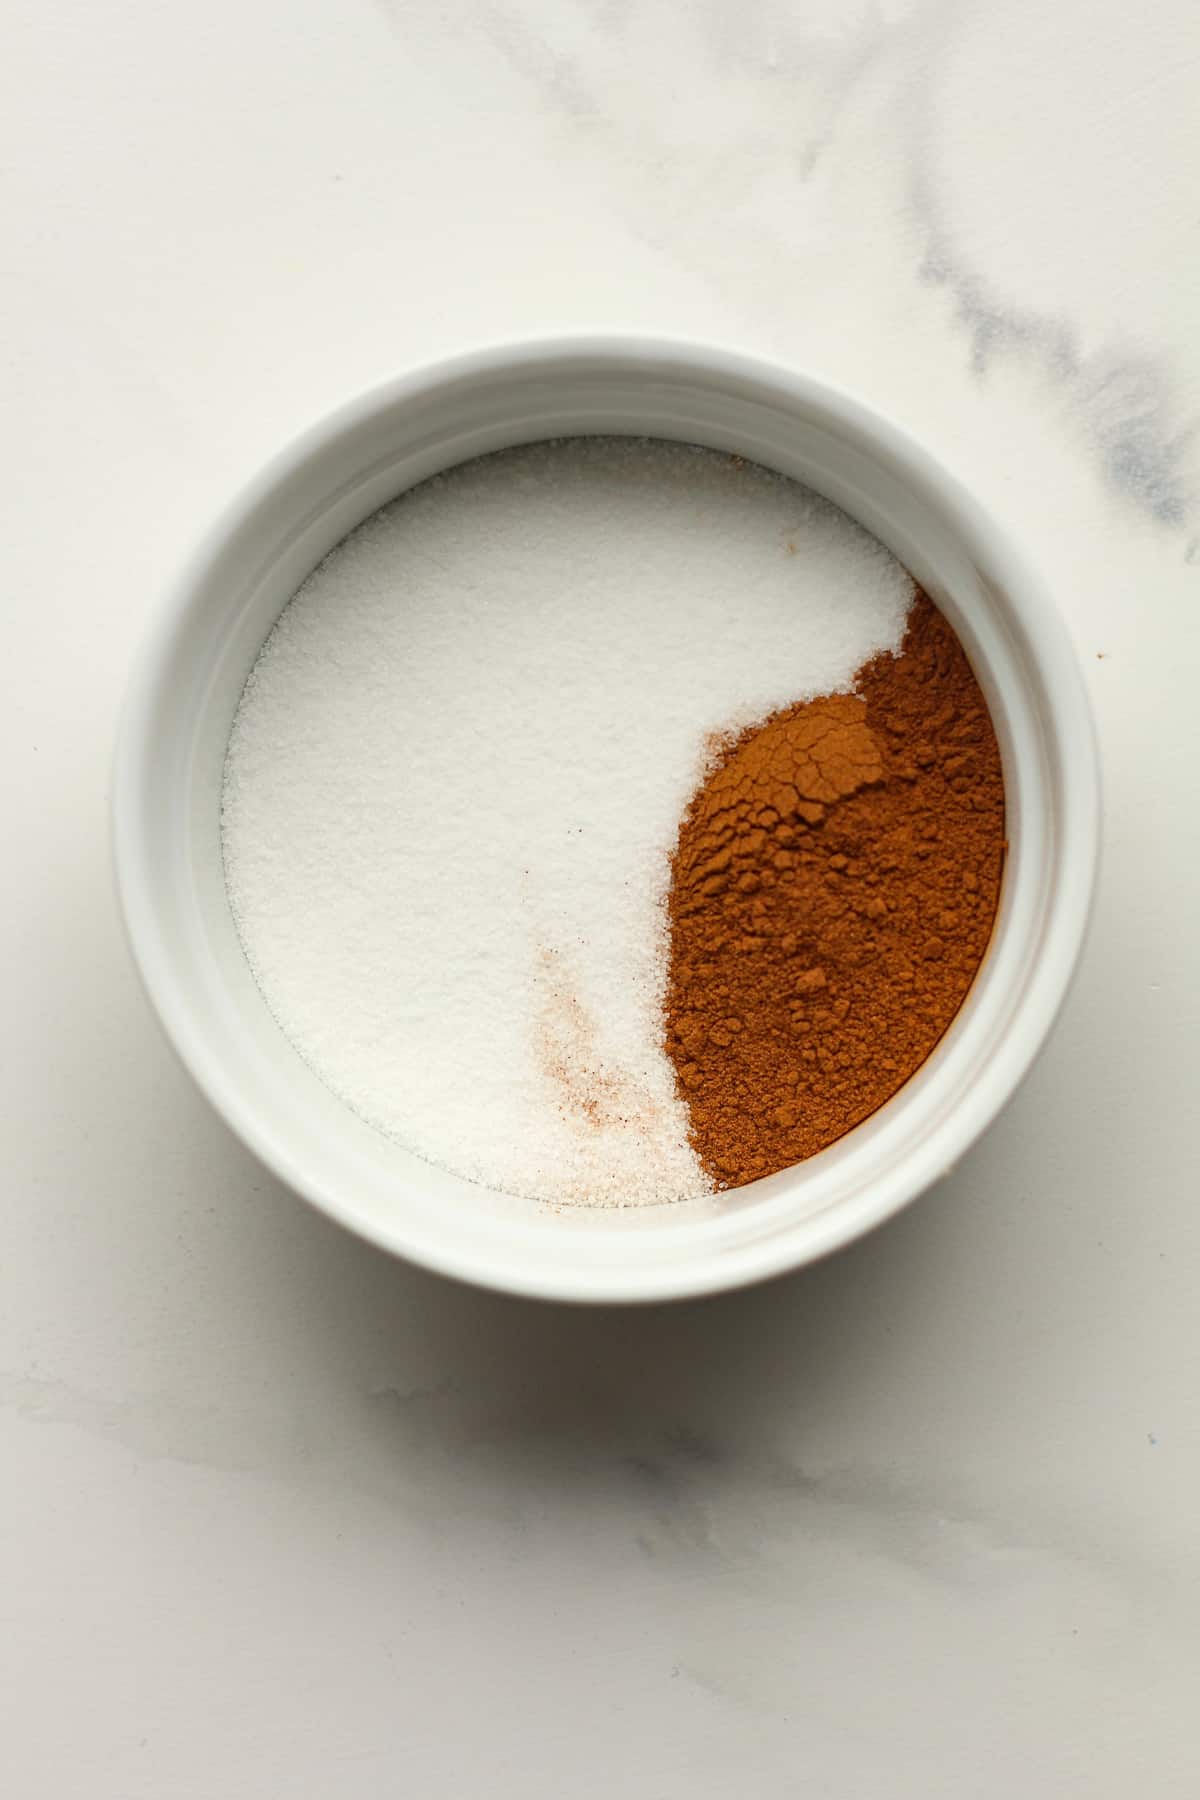 A bowl of sugar and cinnamon.